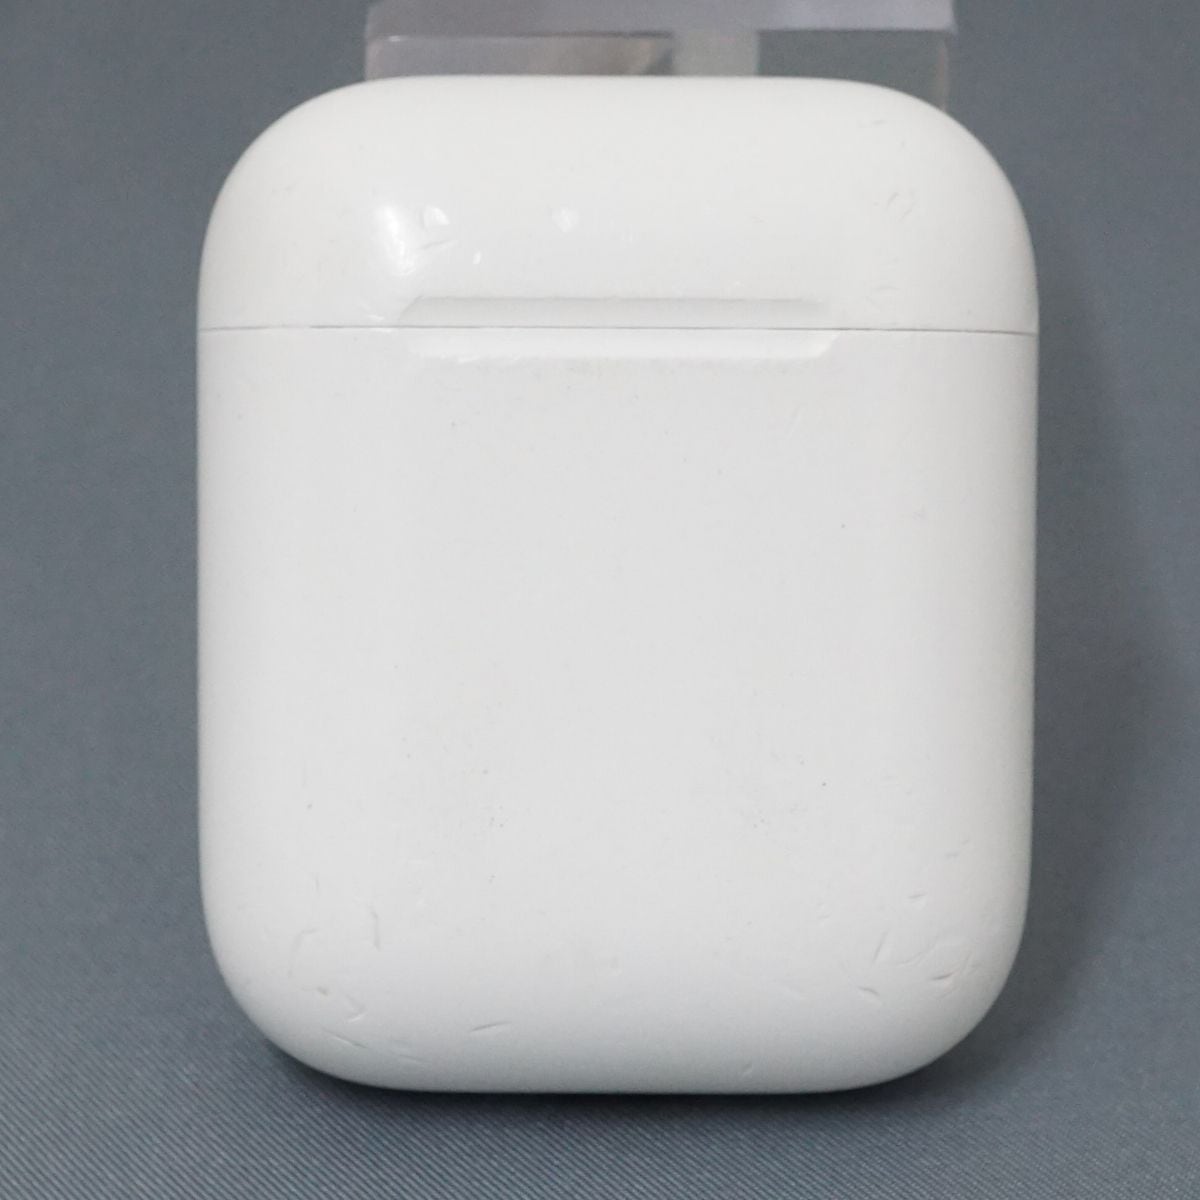 Apple AirPods エアーポッズ 充電ケースのみ 第1世代 USED品